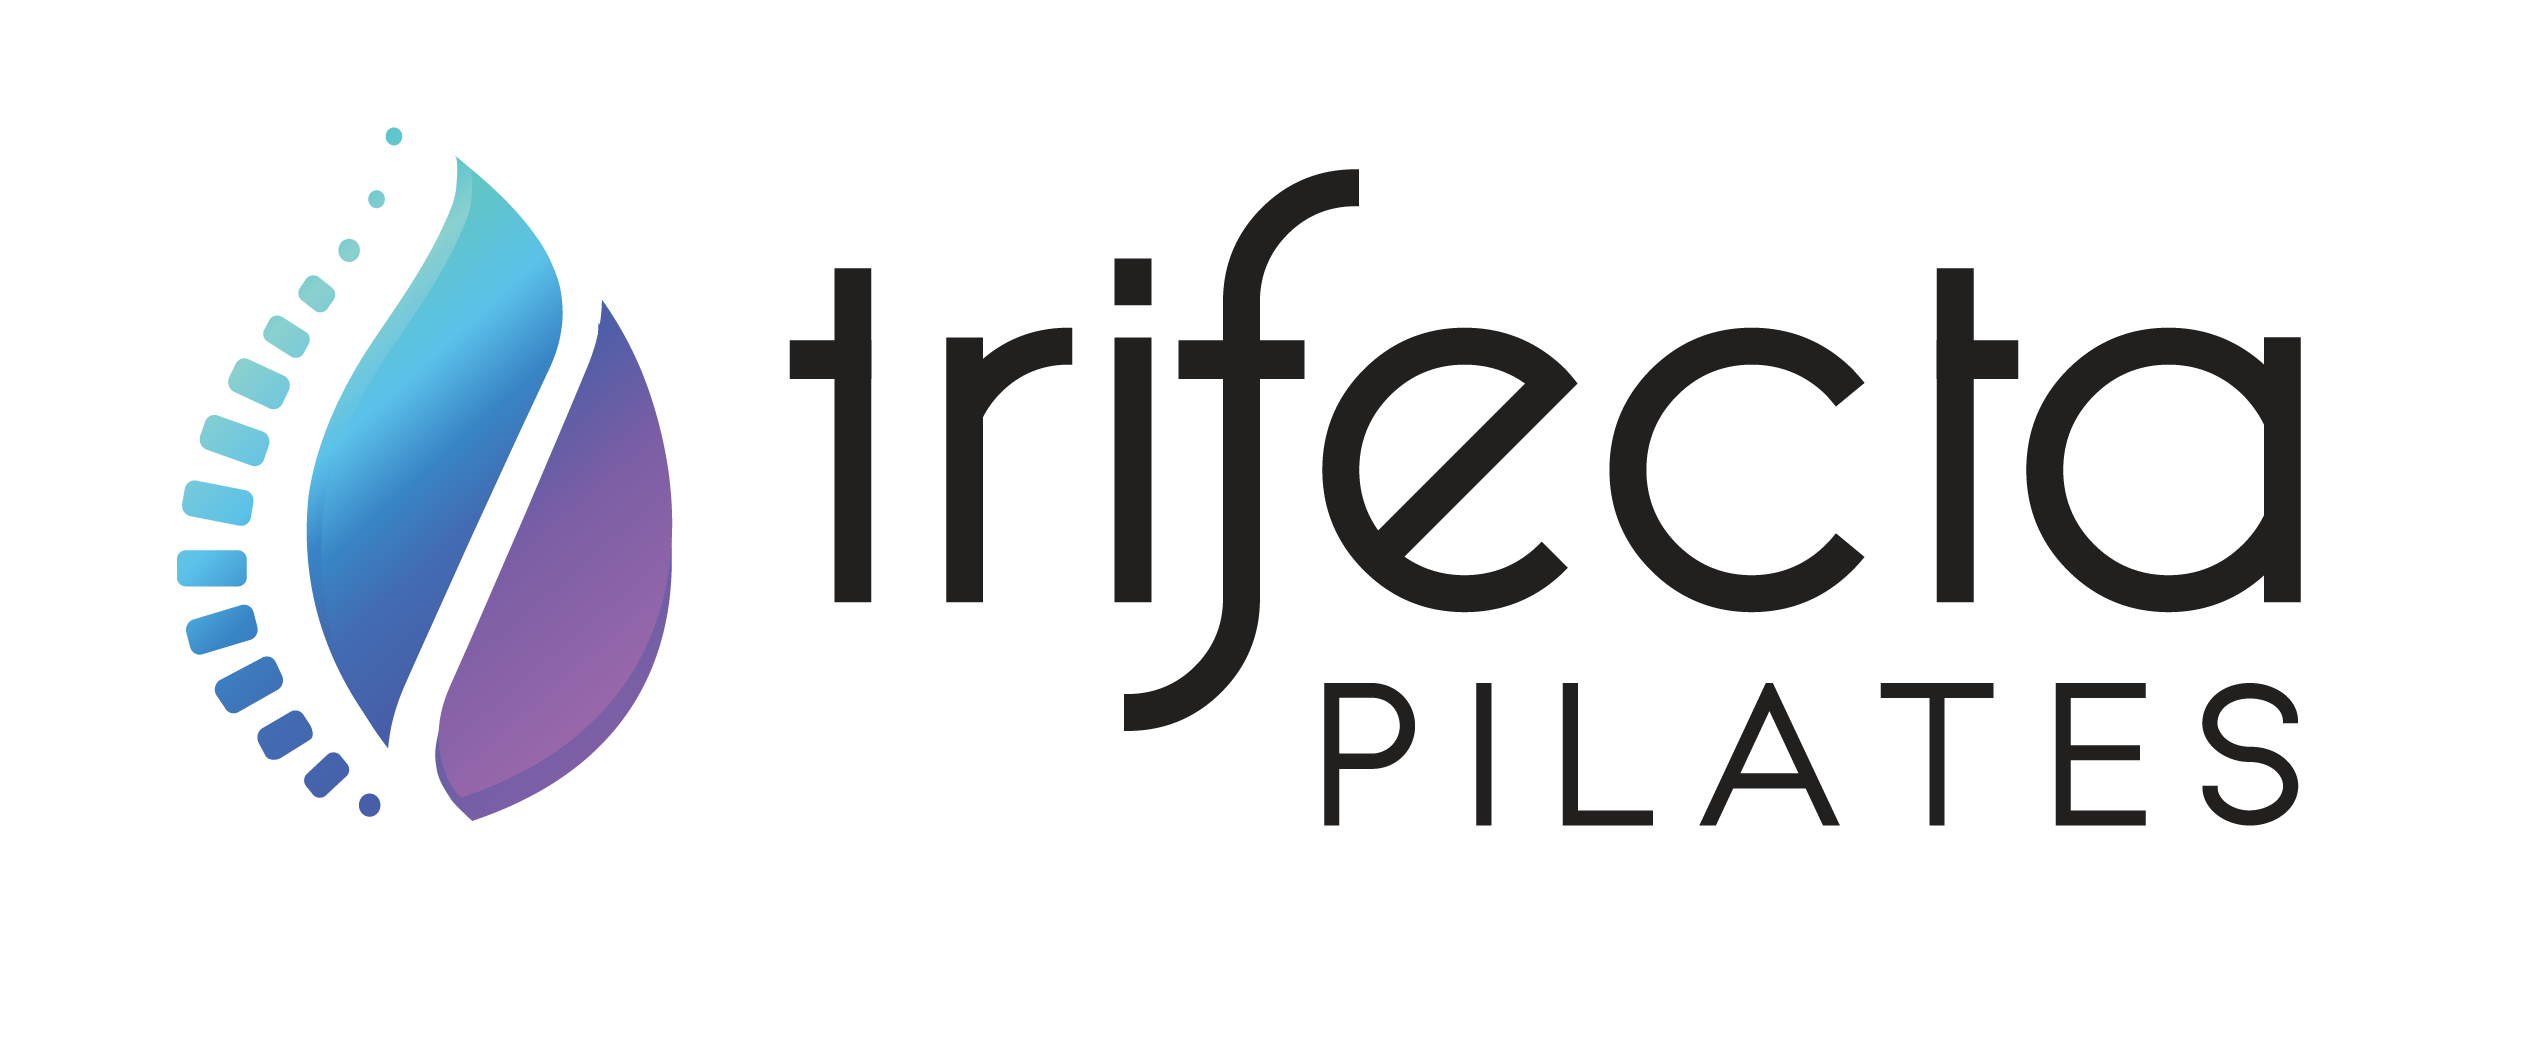 Trifecta Pilates